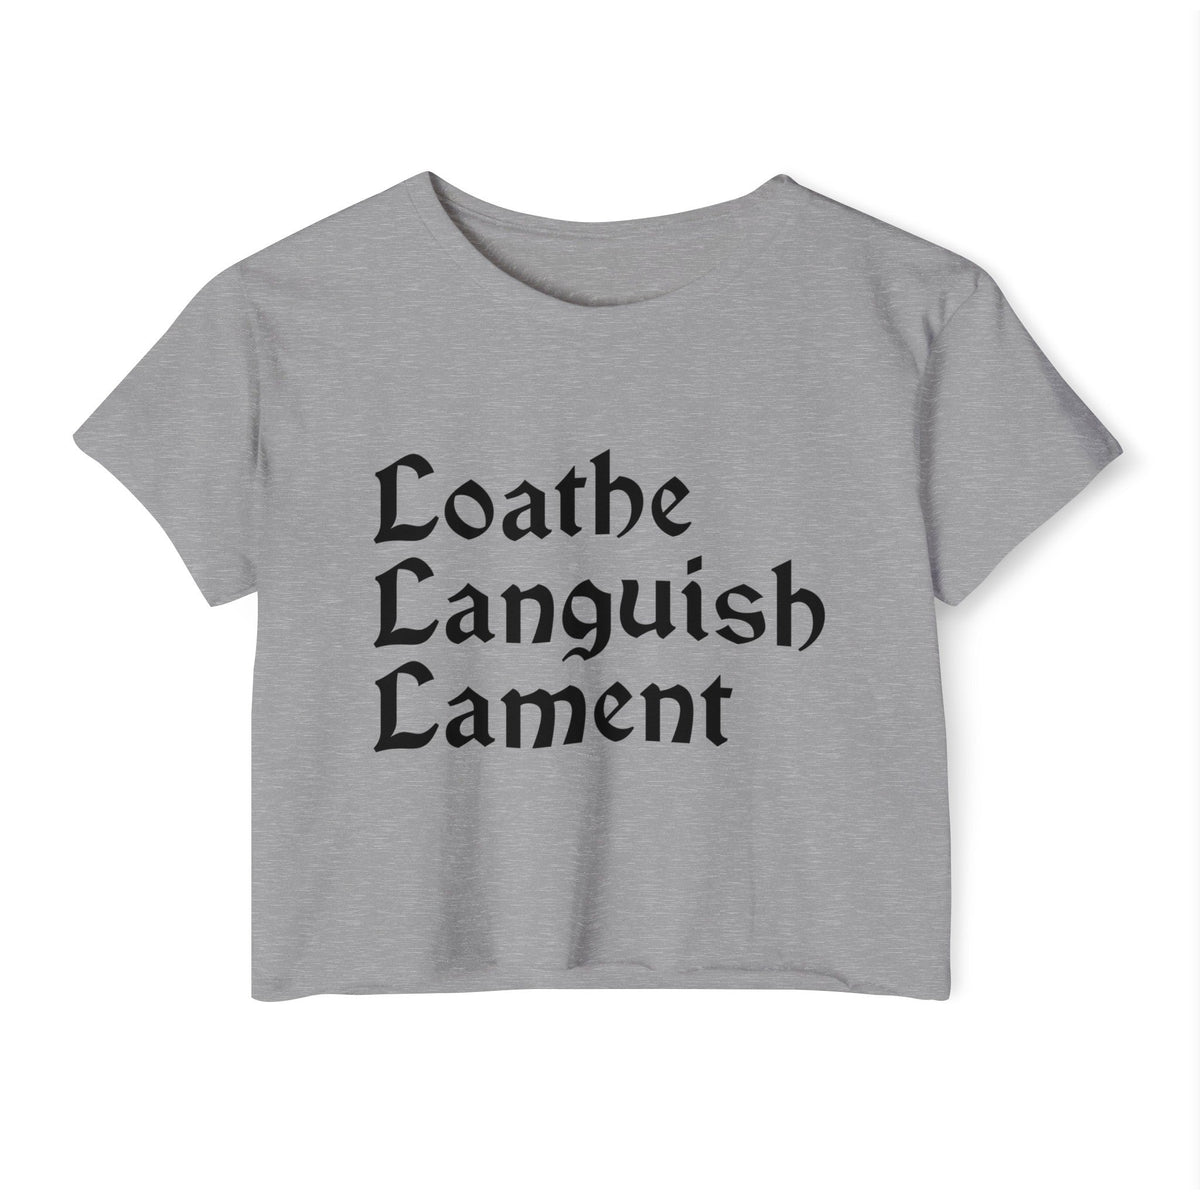 Loathe Languish Lament Stacked Women's Lightweight Crop Top - Goth Cloth Co.T - Shirt31147534523132146650